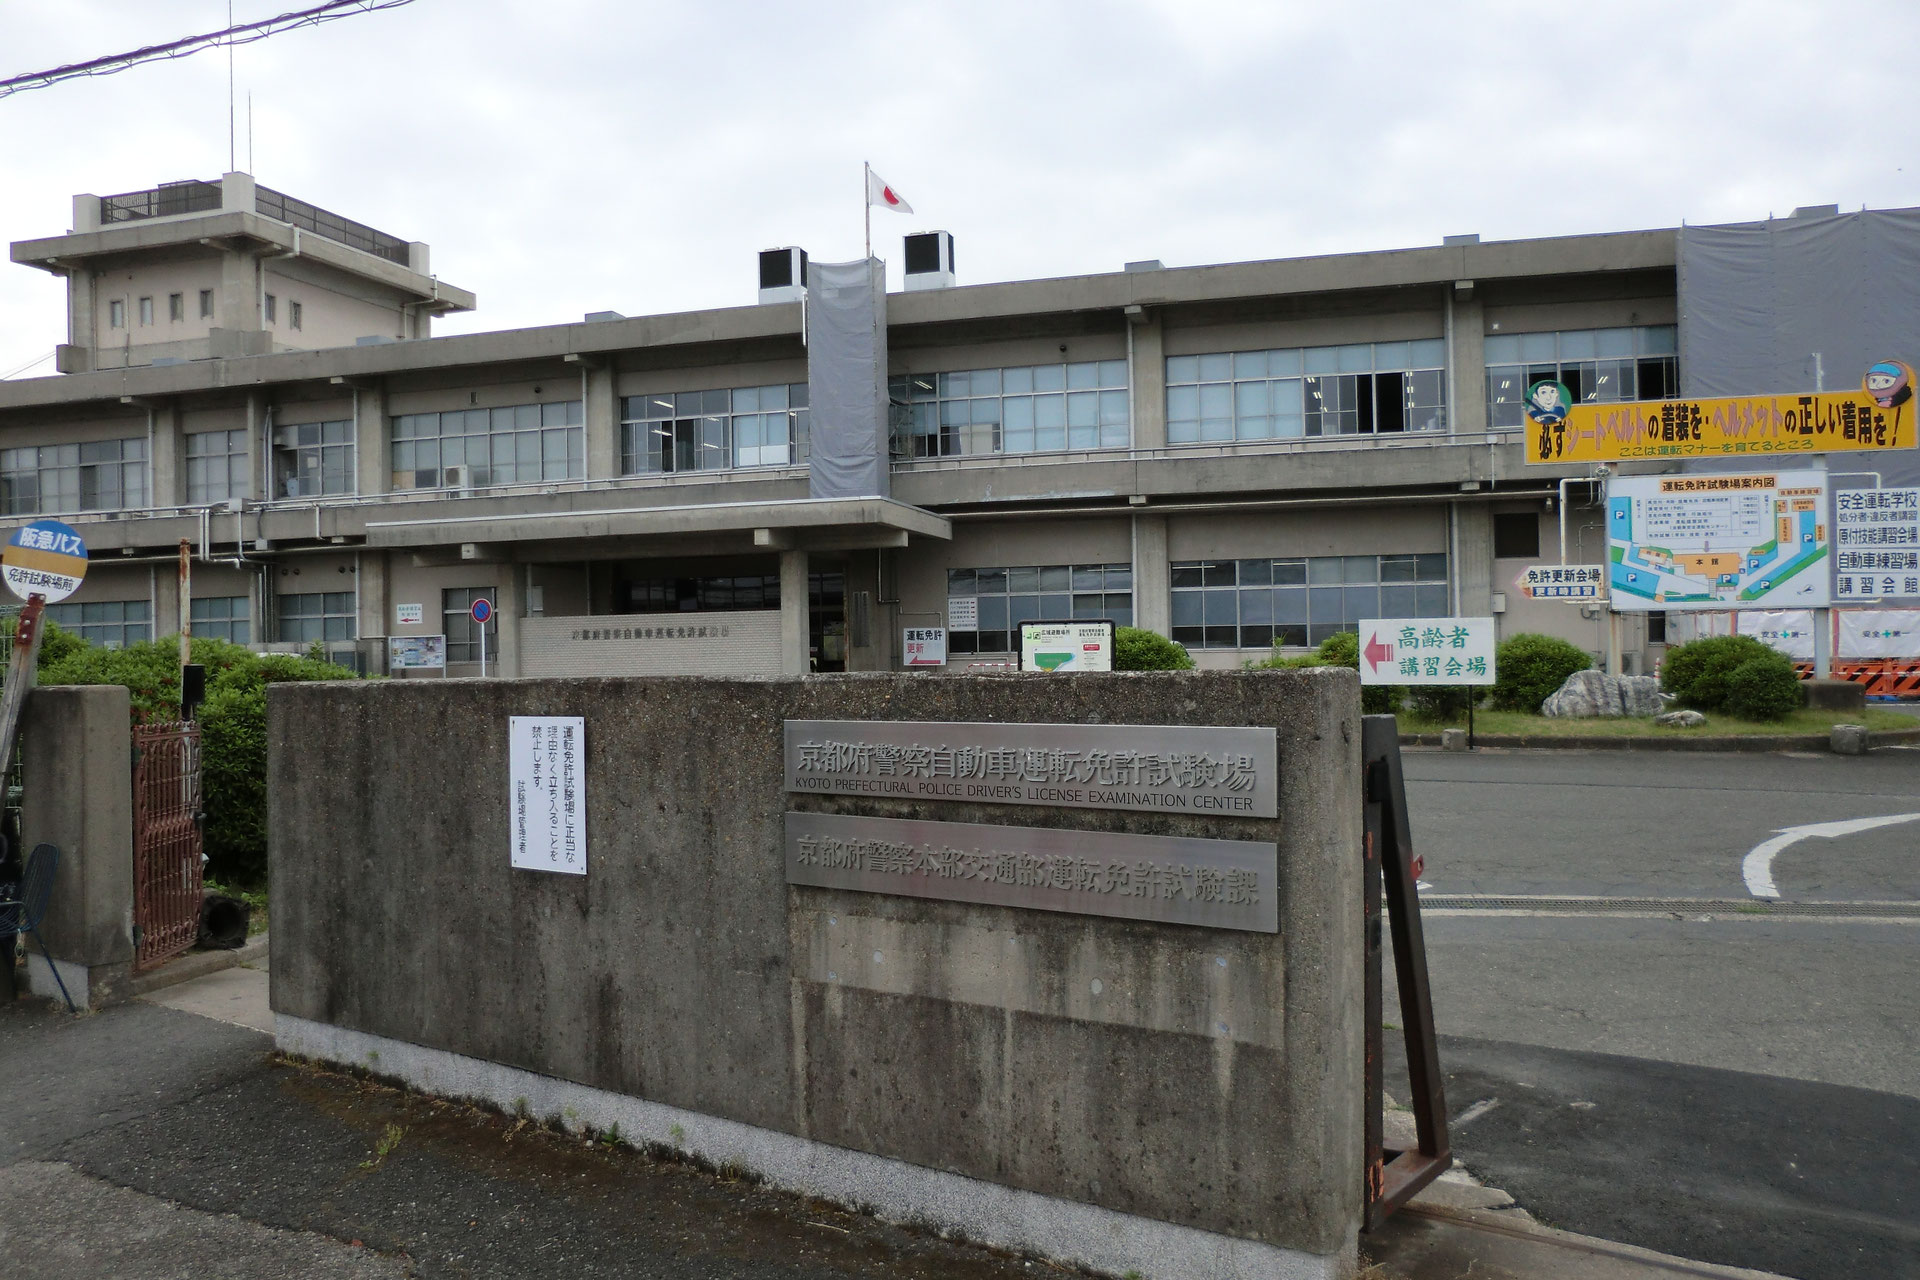 京都府警察自動車運転免許試験場 飛び込み飛び入り一発免許試験